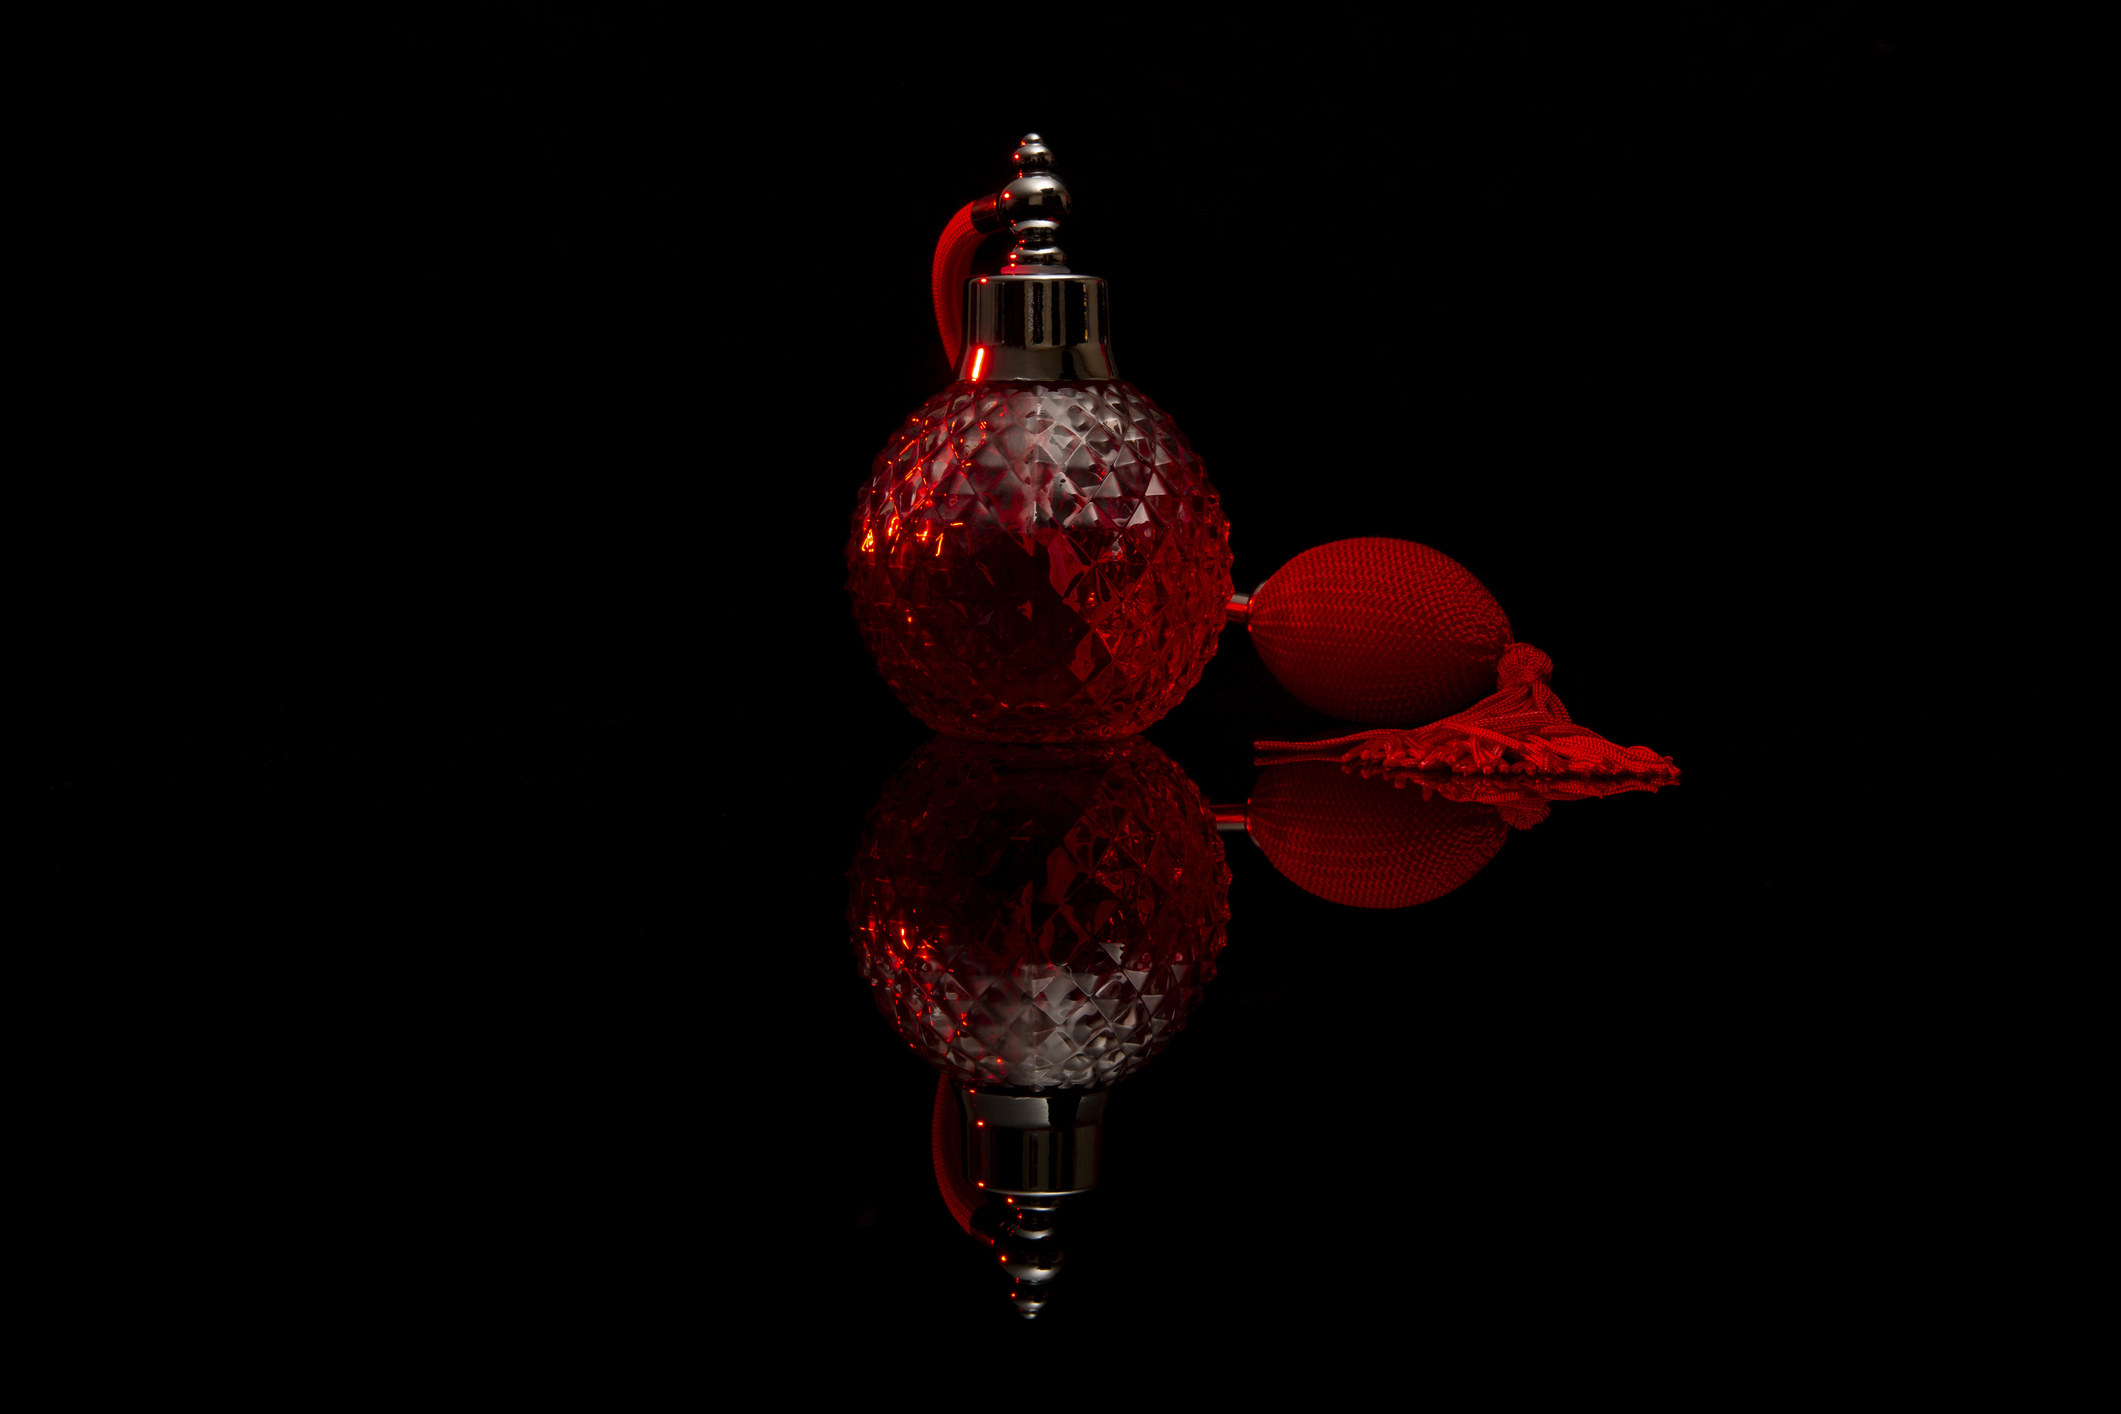 A perfume bottle